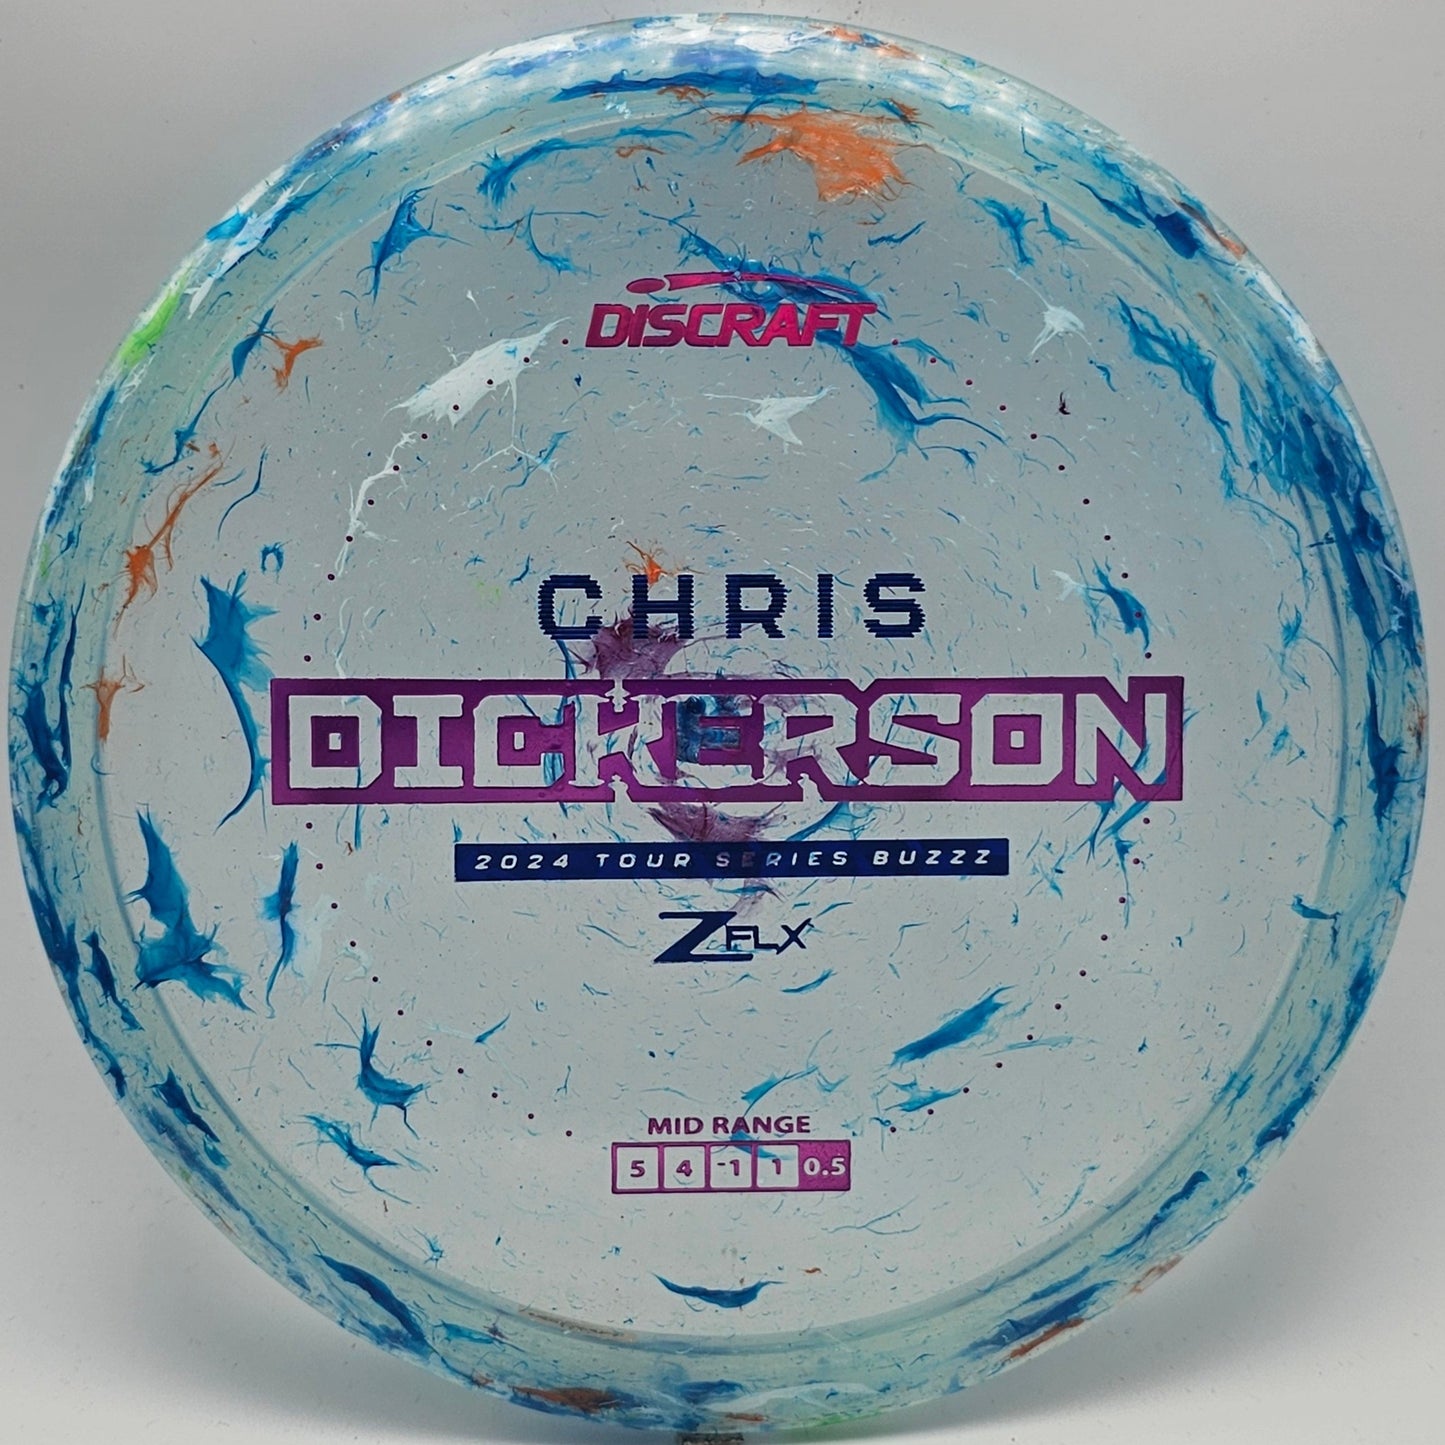 Discraft Chris Dickerson Buzzz - Tour Series 2024